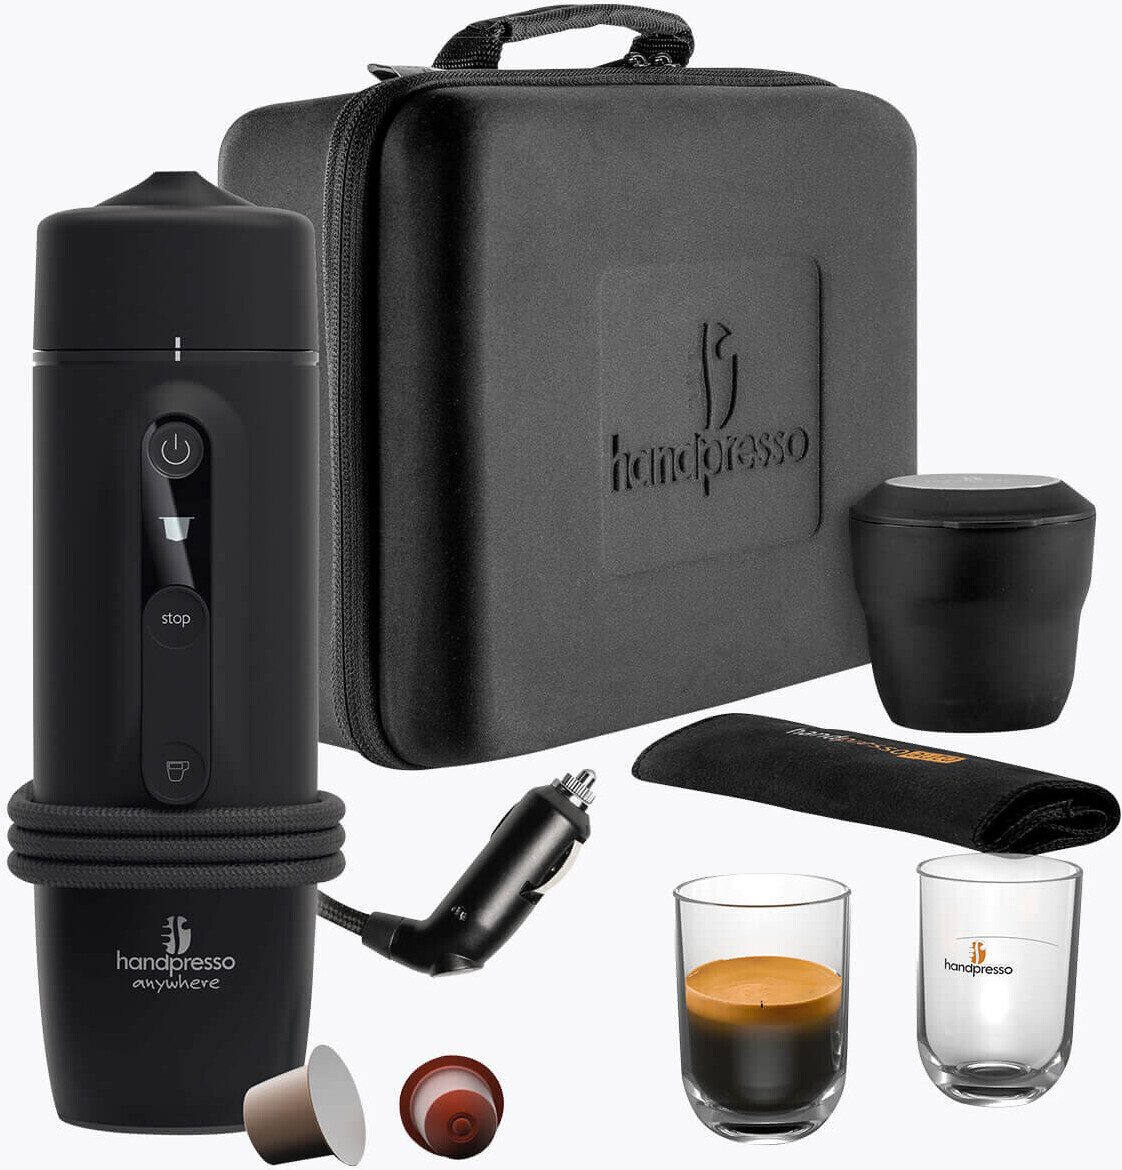 Handpresso – Cafetiere Portable 12V Handcoffee Auto 21000